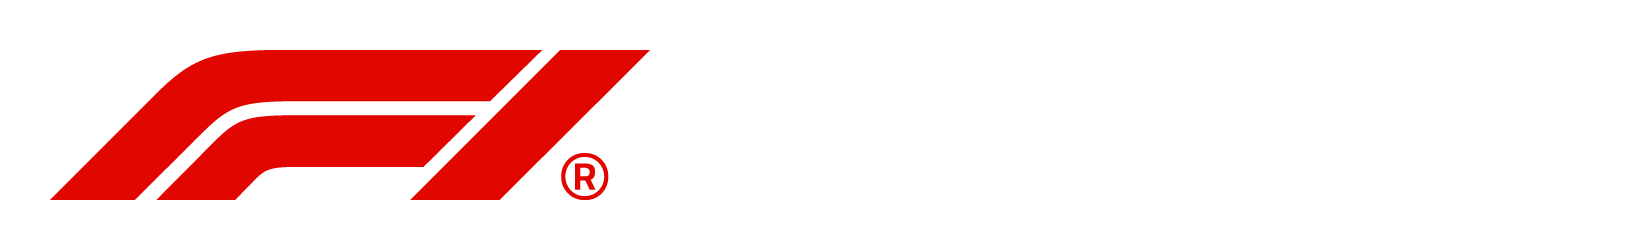 Logo do Fórmula 1 GP Brasil